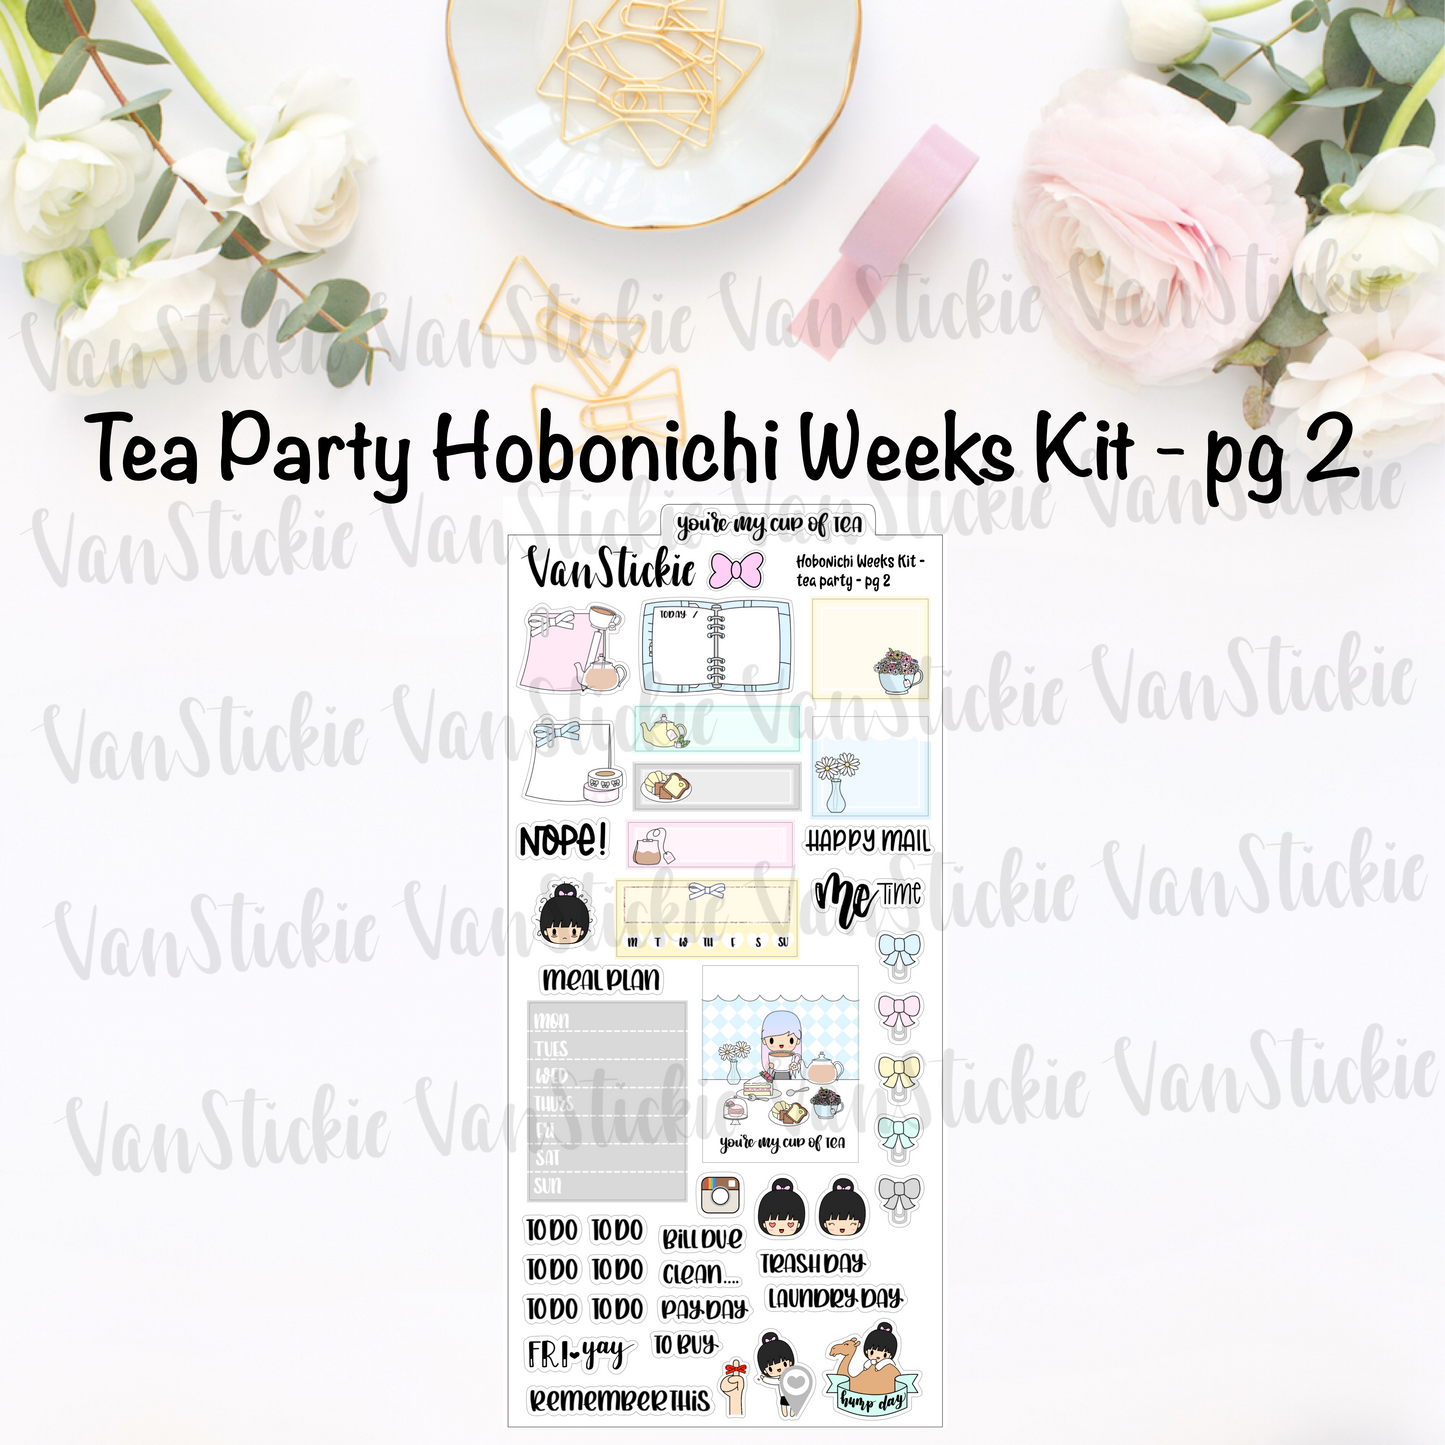 Hobonichi Weeks Kit - "Tea Party"